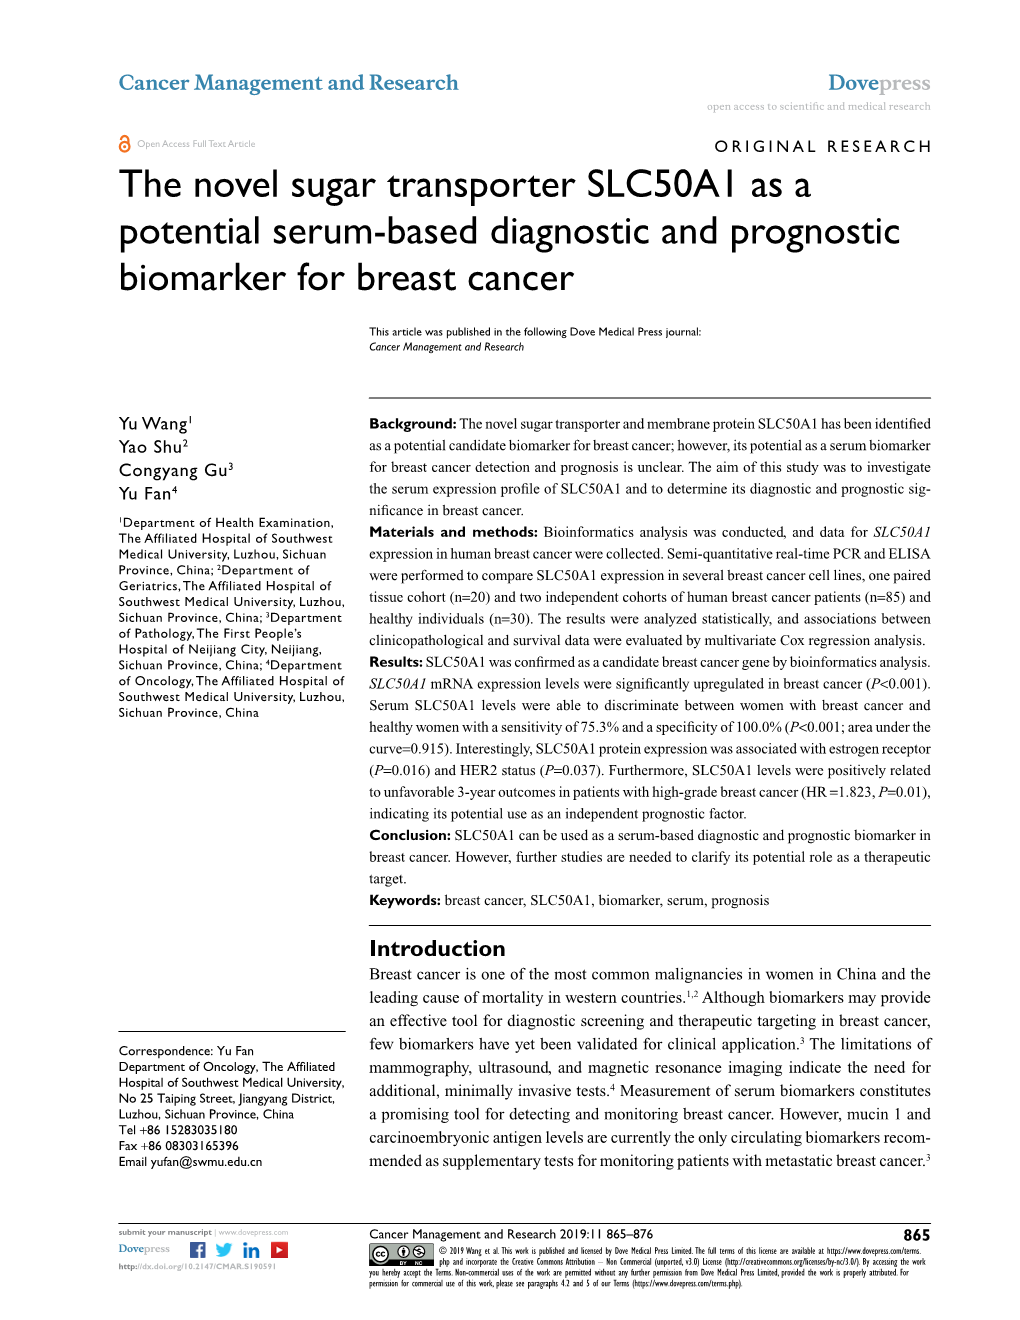 The Novel Sugar Transporter SLC50A1 As a Potential Serum-Based Diagnostic and Prognostic Biomarker for Breast Cancer